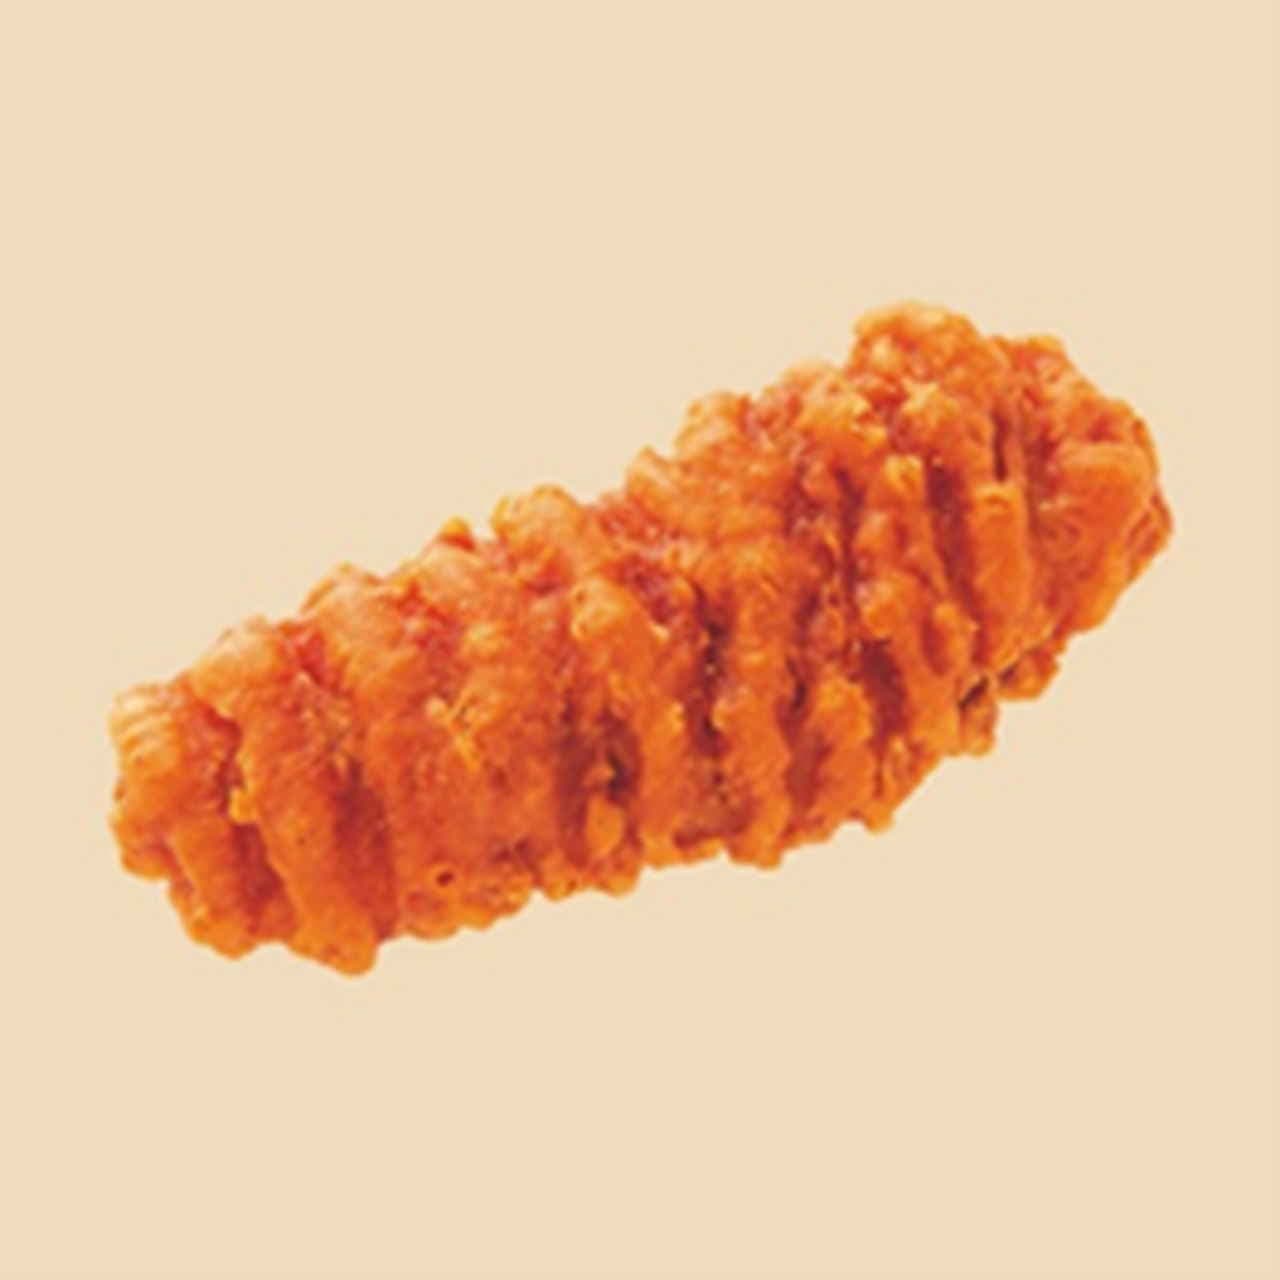 Famima Crispy Chicken (Habanero Hot)